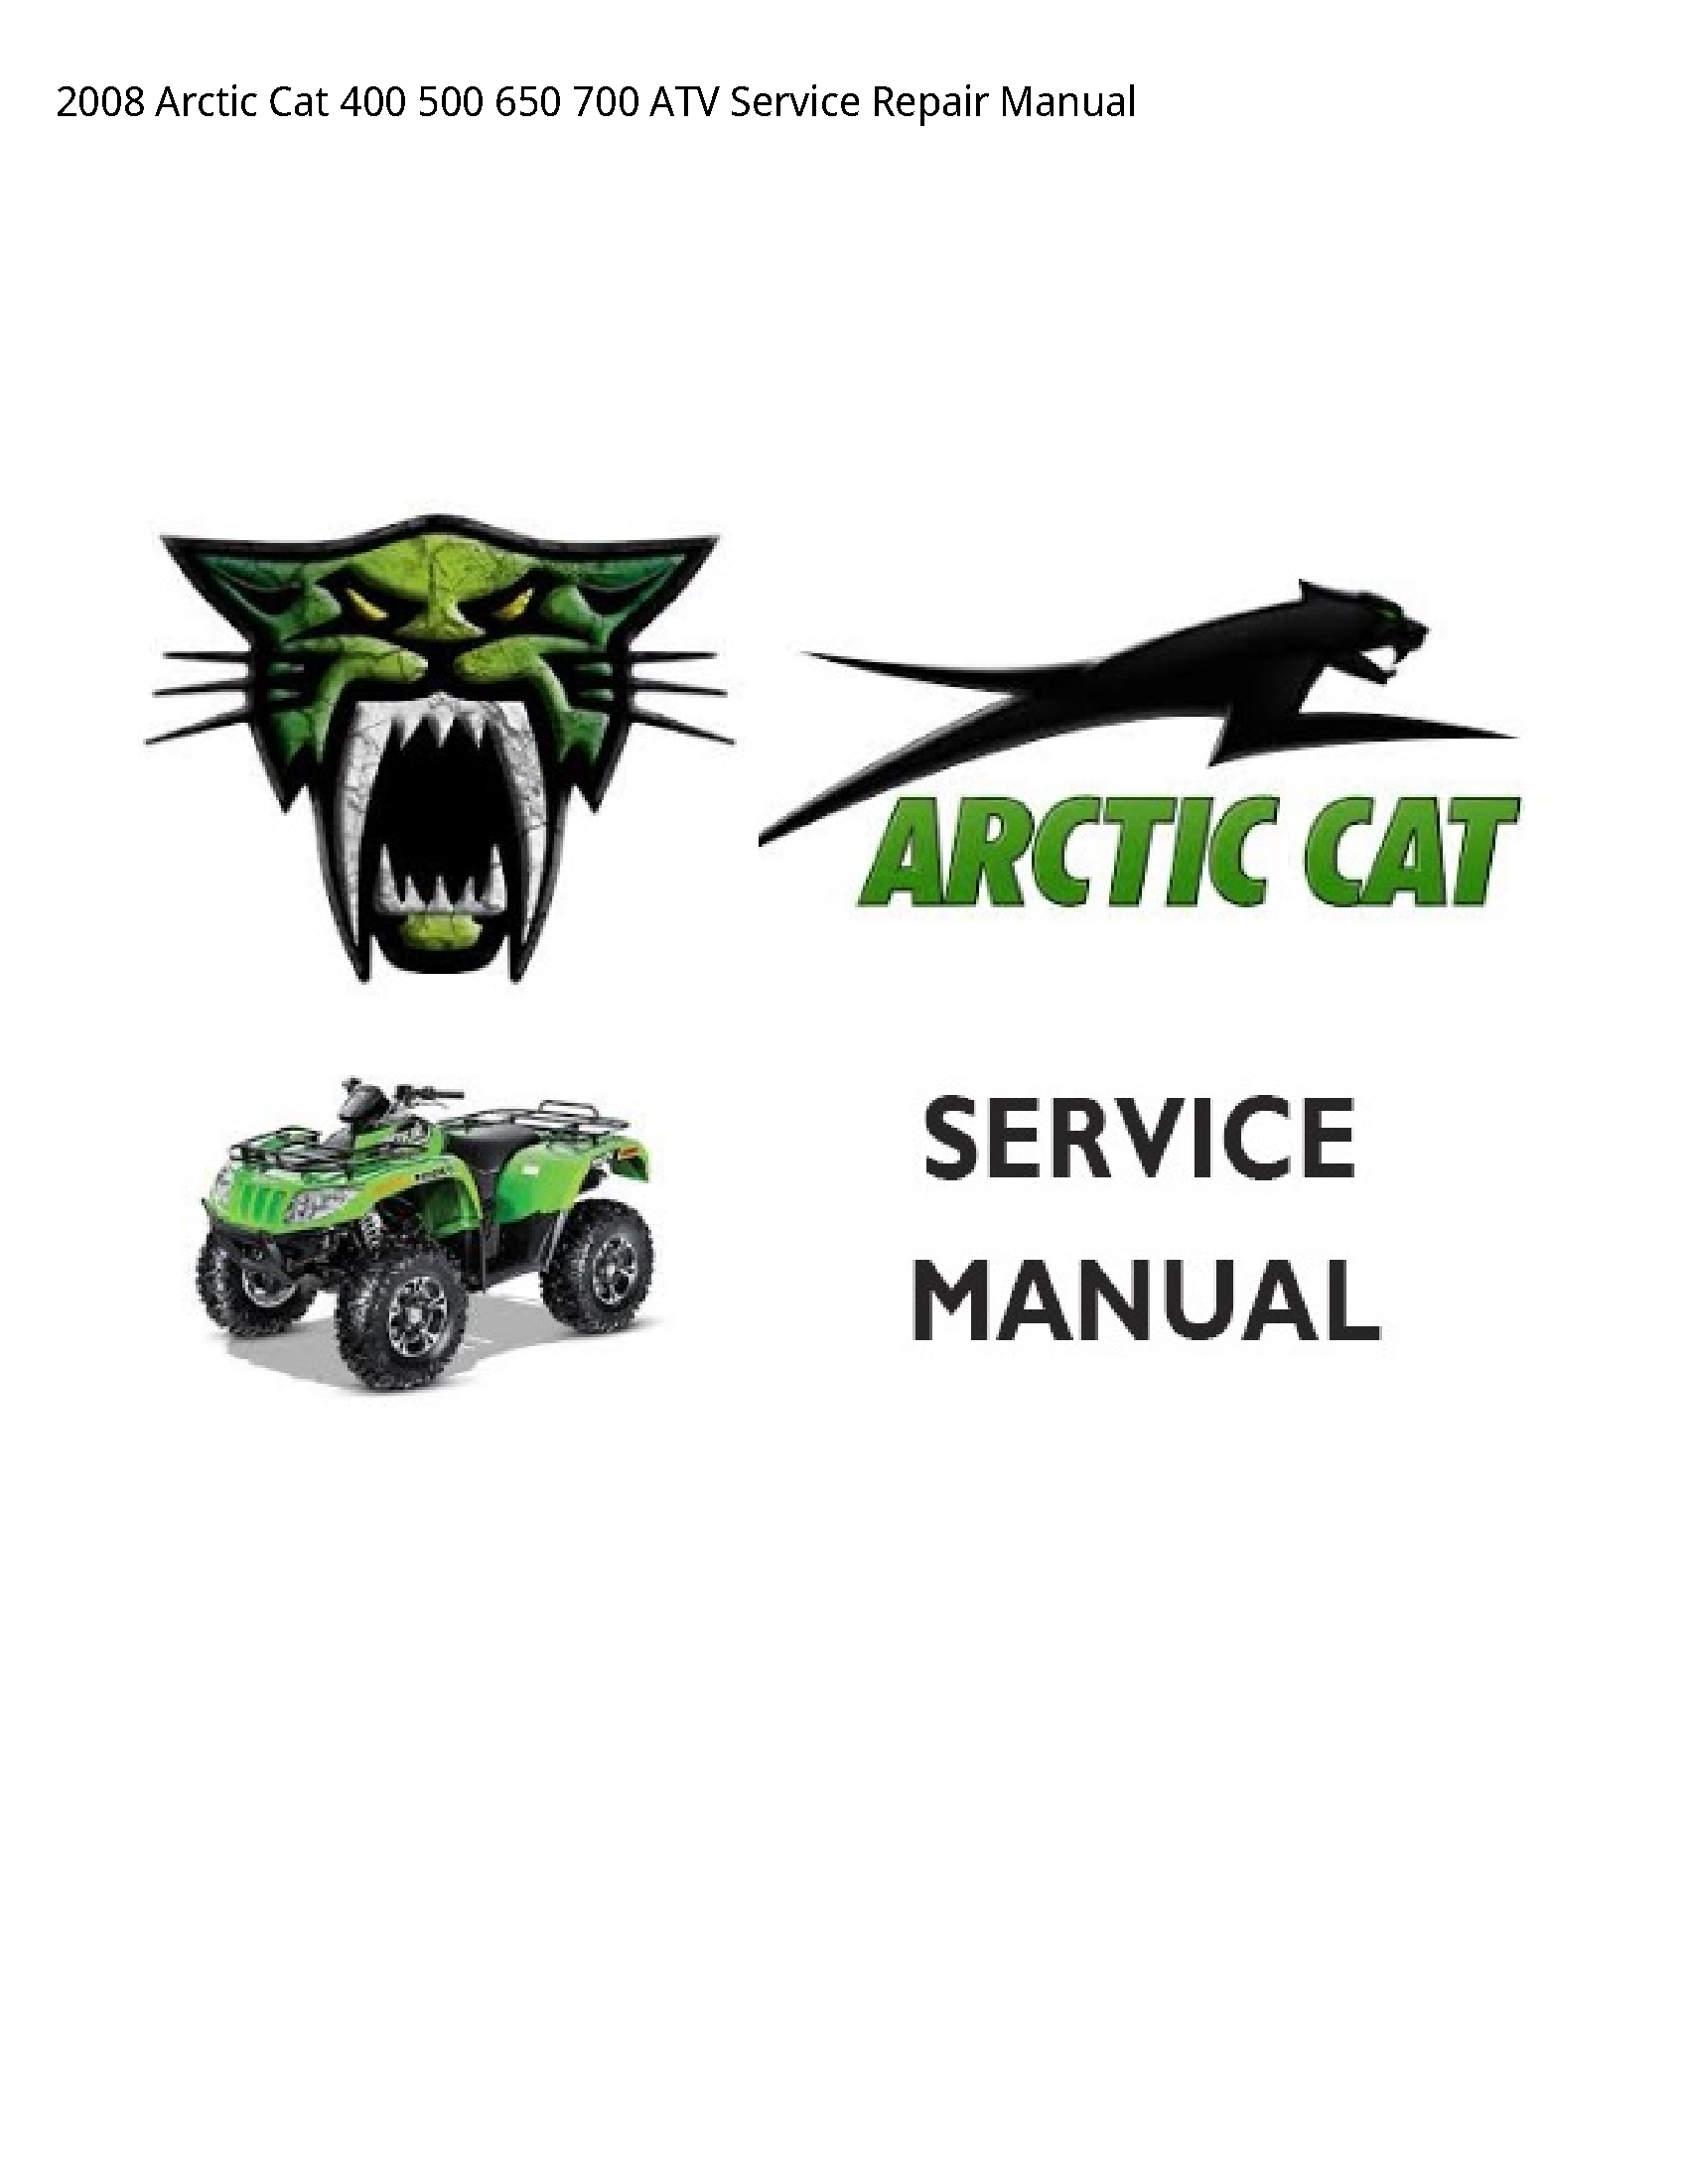 Arctic Cat 400 ATV manual